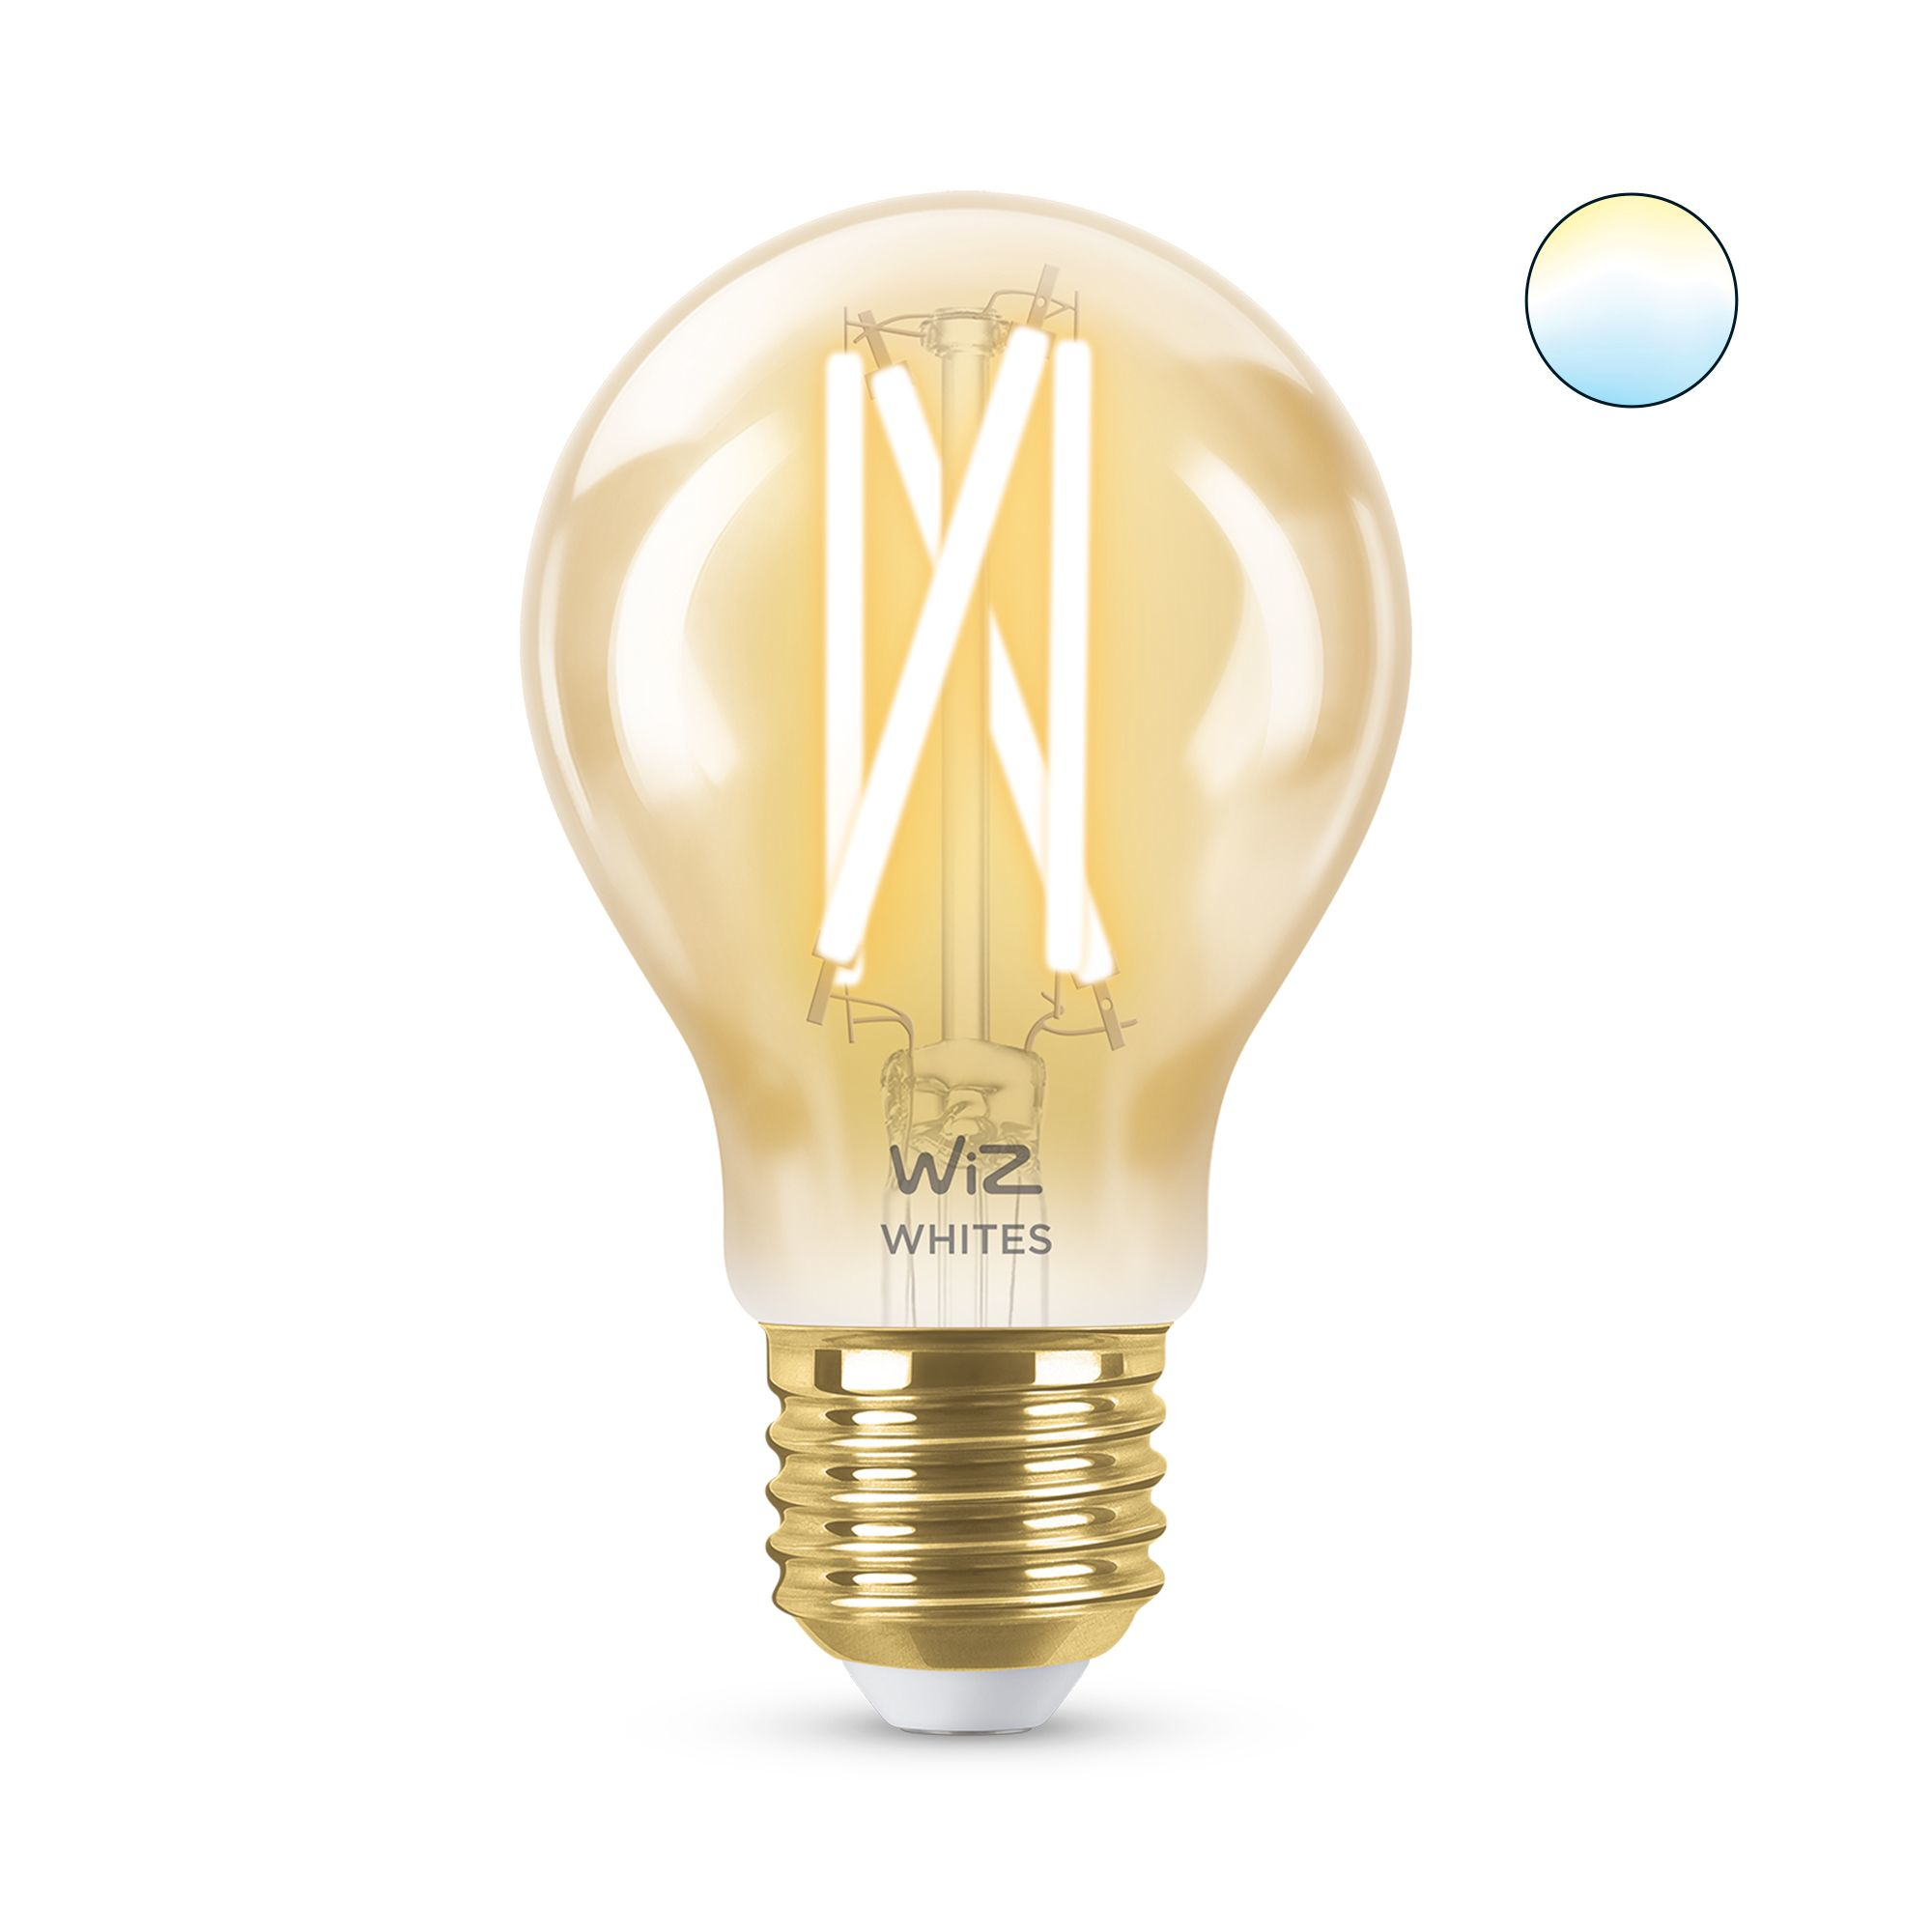 WIZCONNECTED WiZ 8718699787219 - Intelligente Glühbirne - Gold - WLAN - E27 - Multi - 2000 K